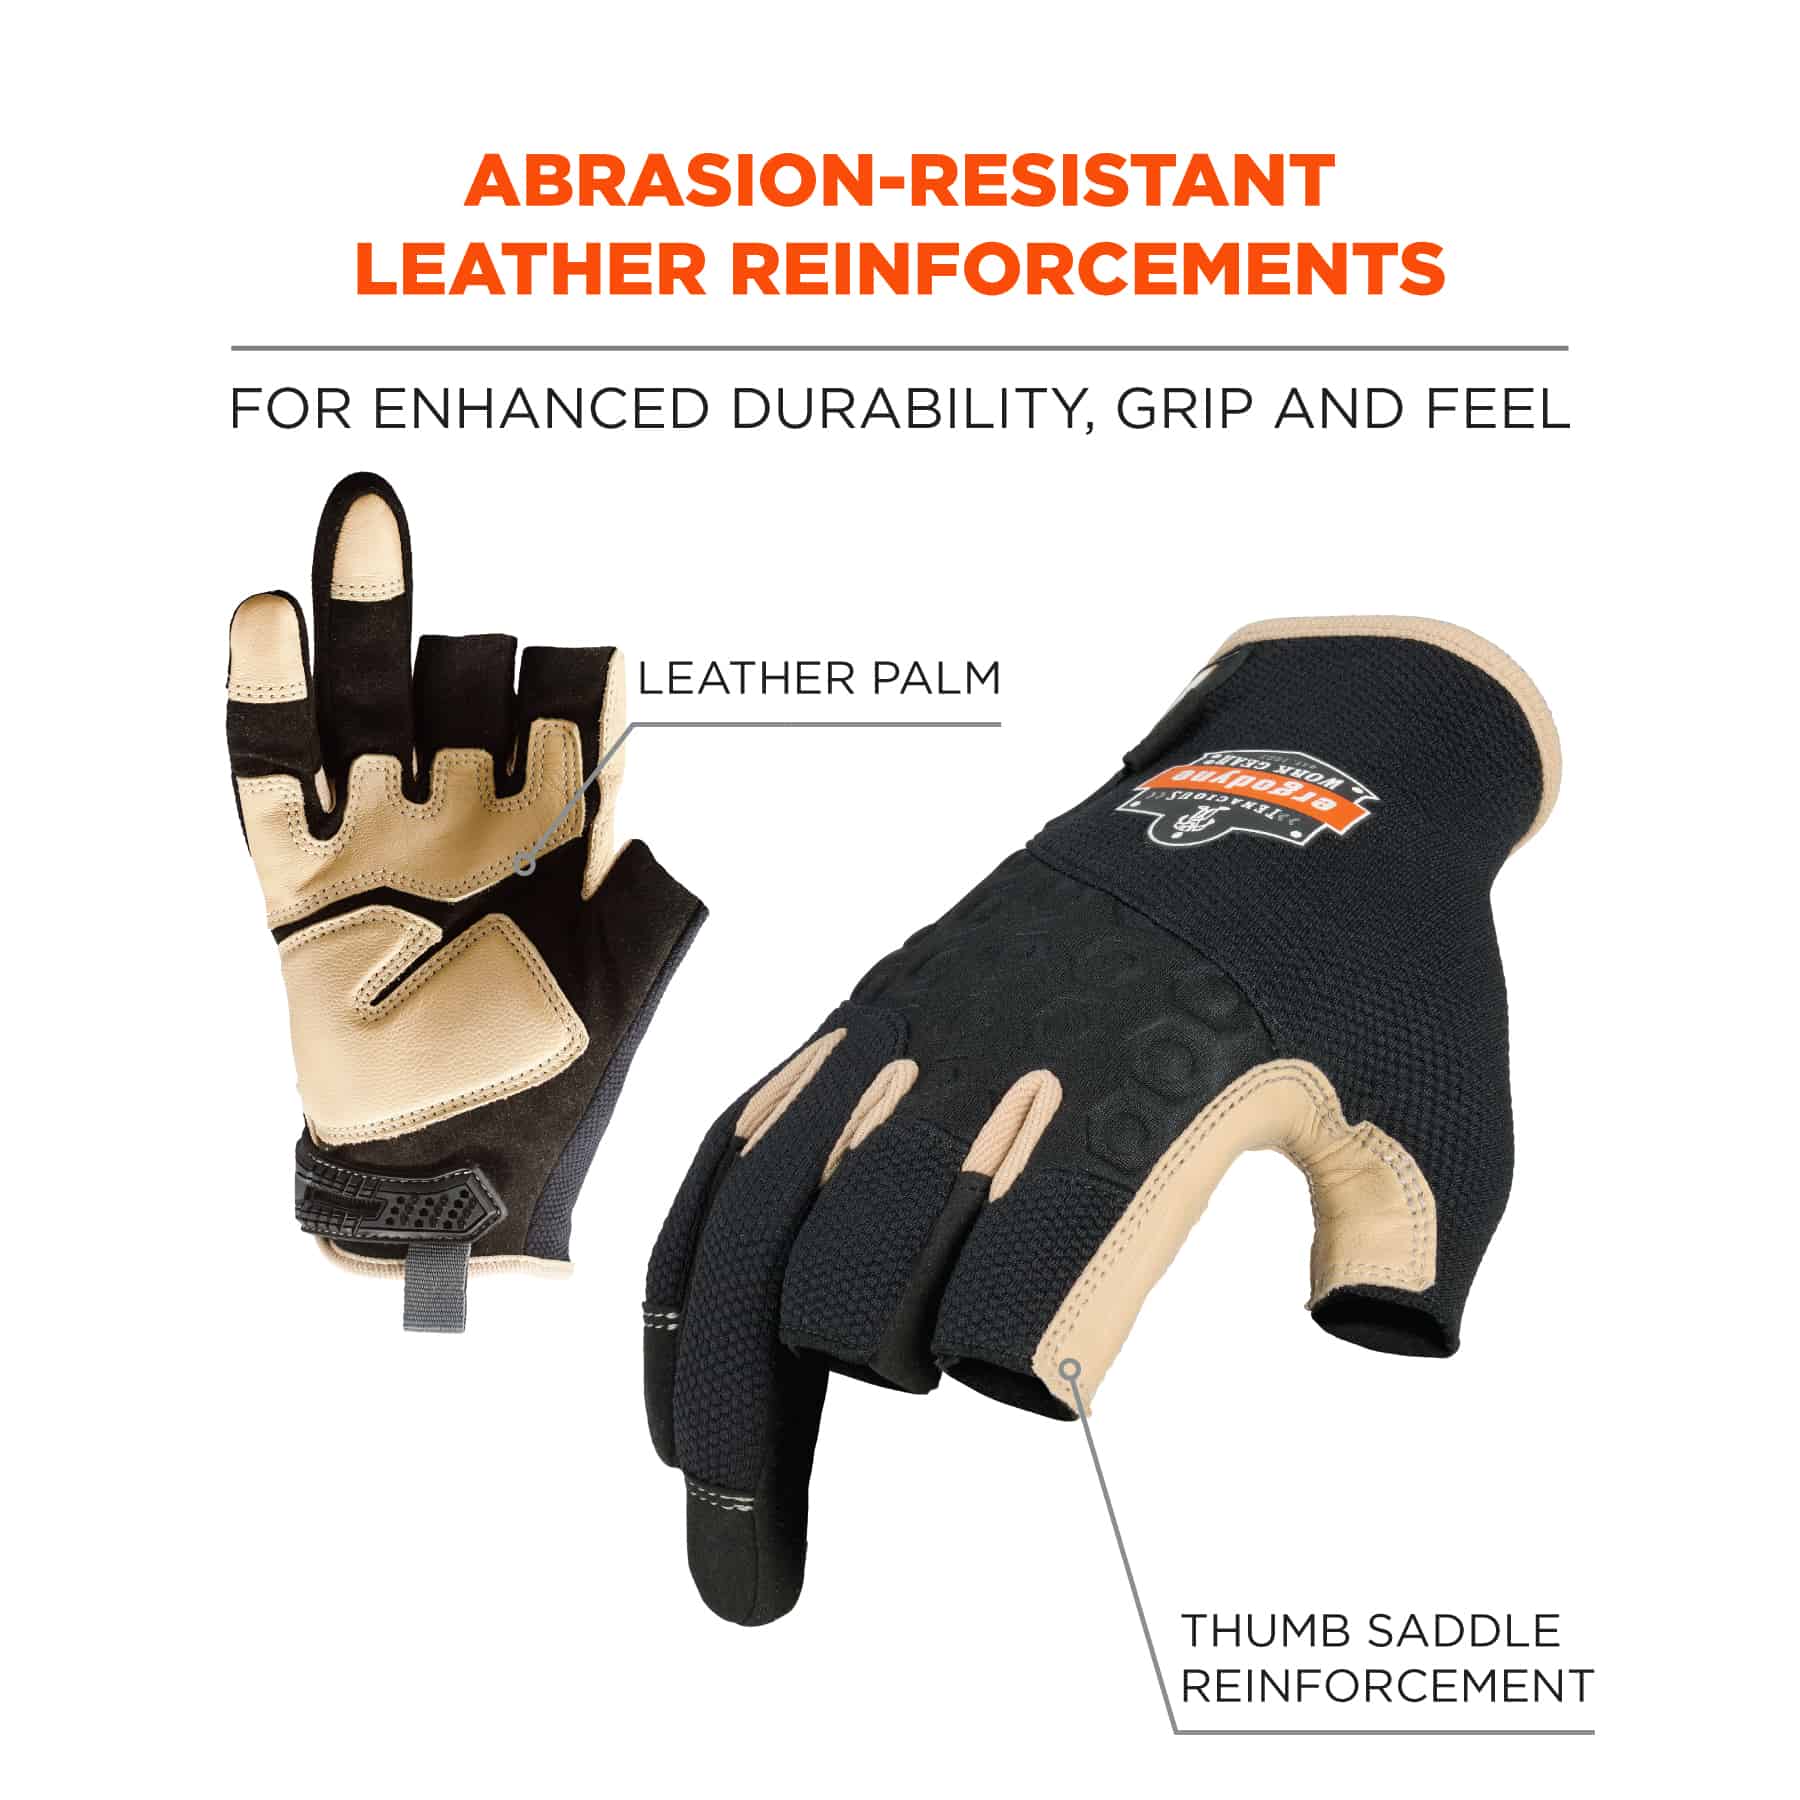 https://www.ergodyne.com/sites/default/files/product-images/17152-720ltr-heavy-duty-framing-gloves-abrasion-resistant-leather-reinforcements.jpg